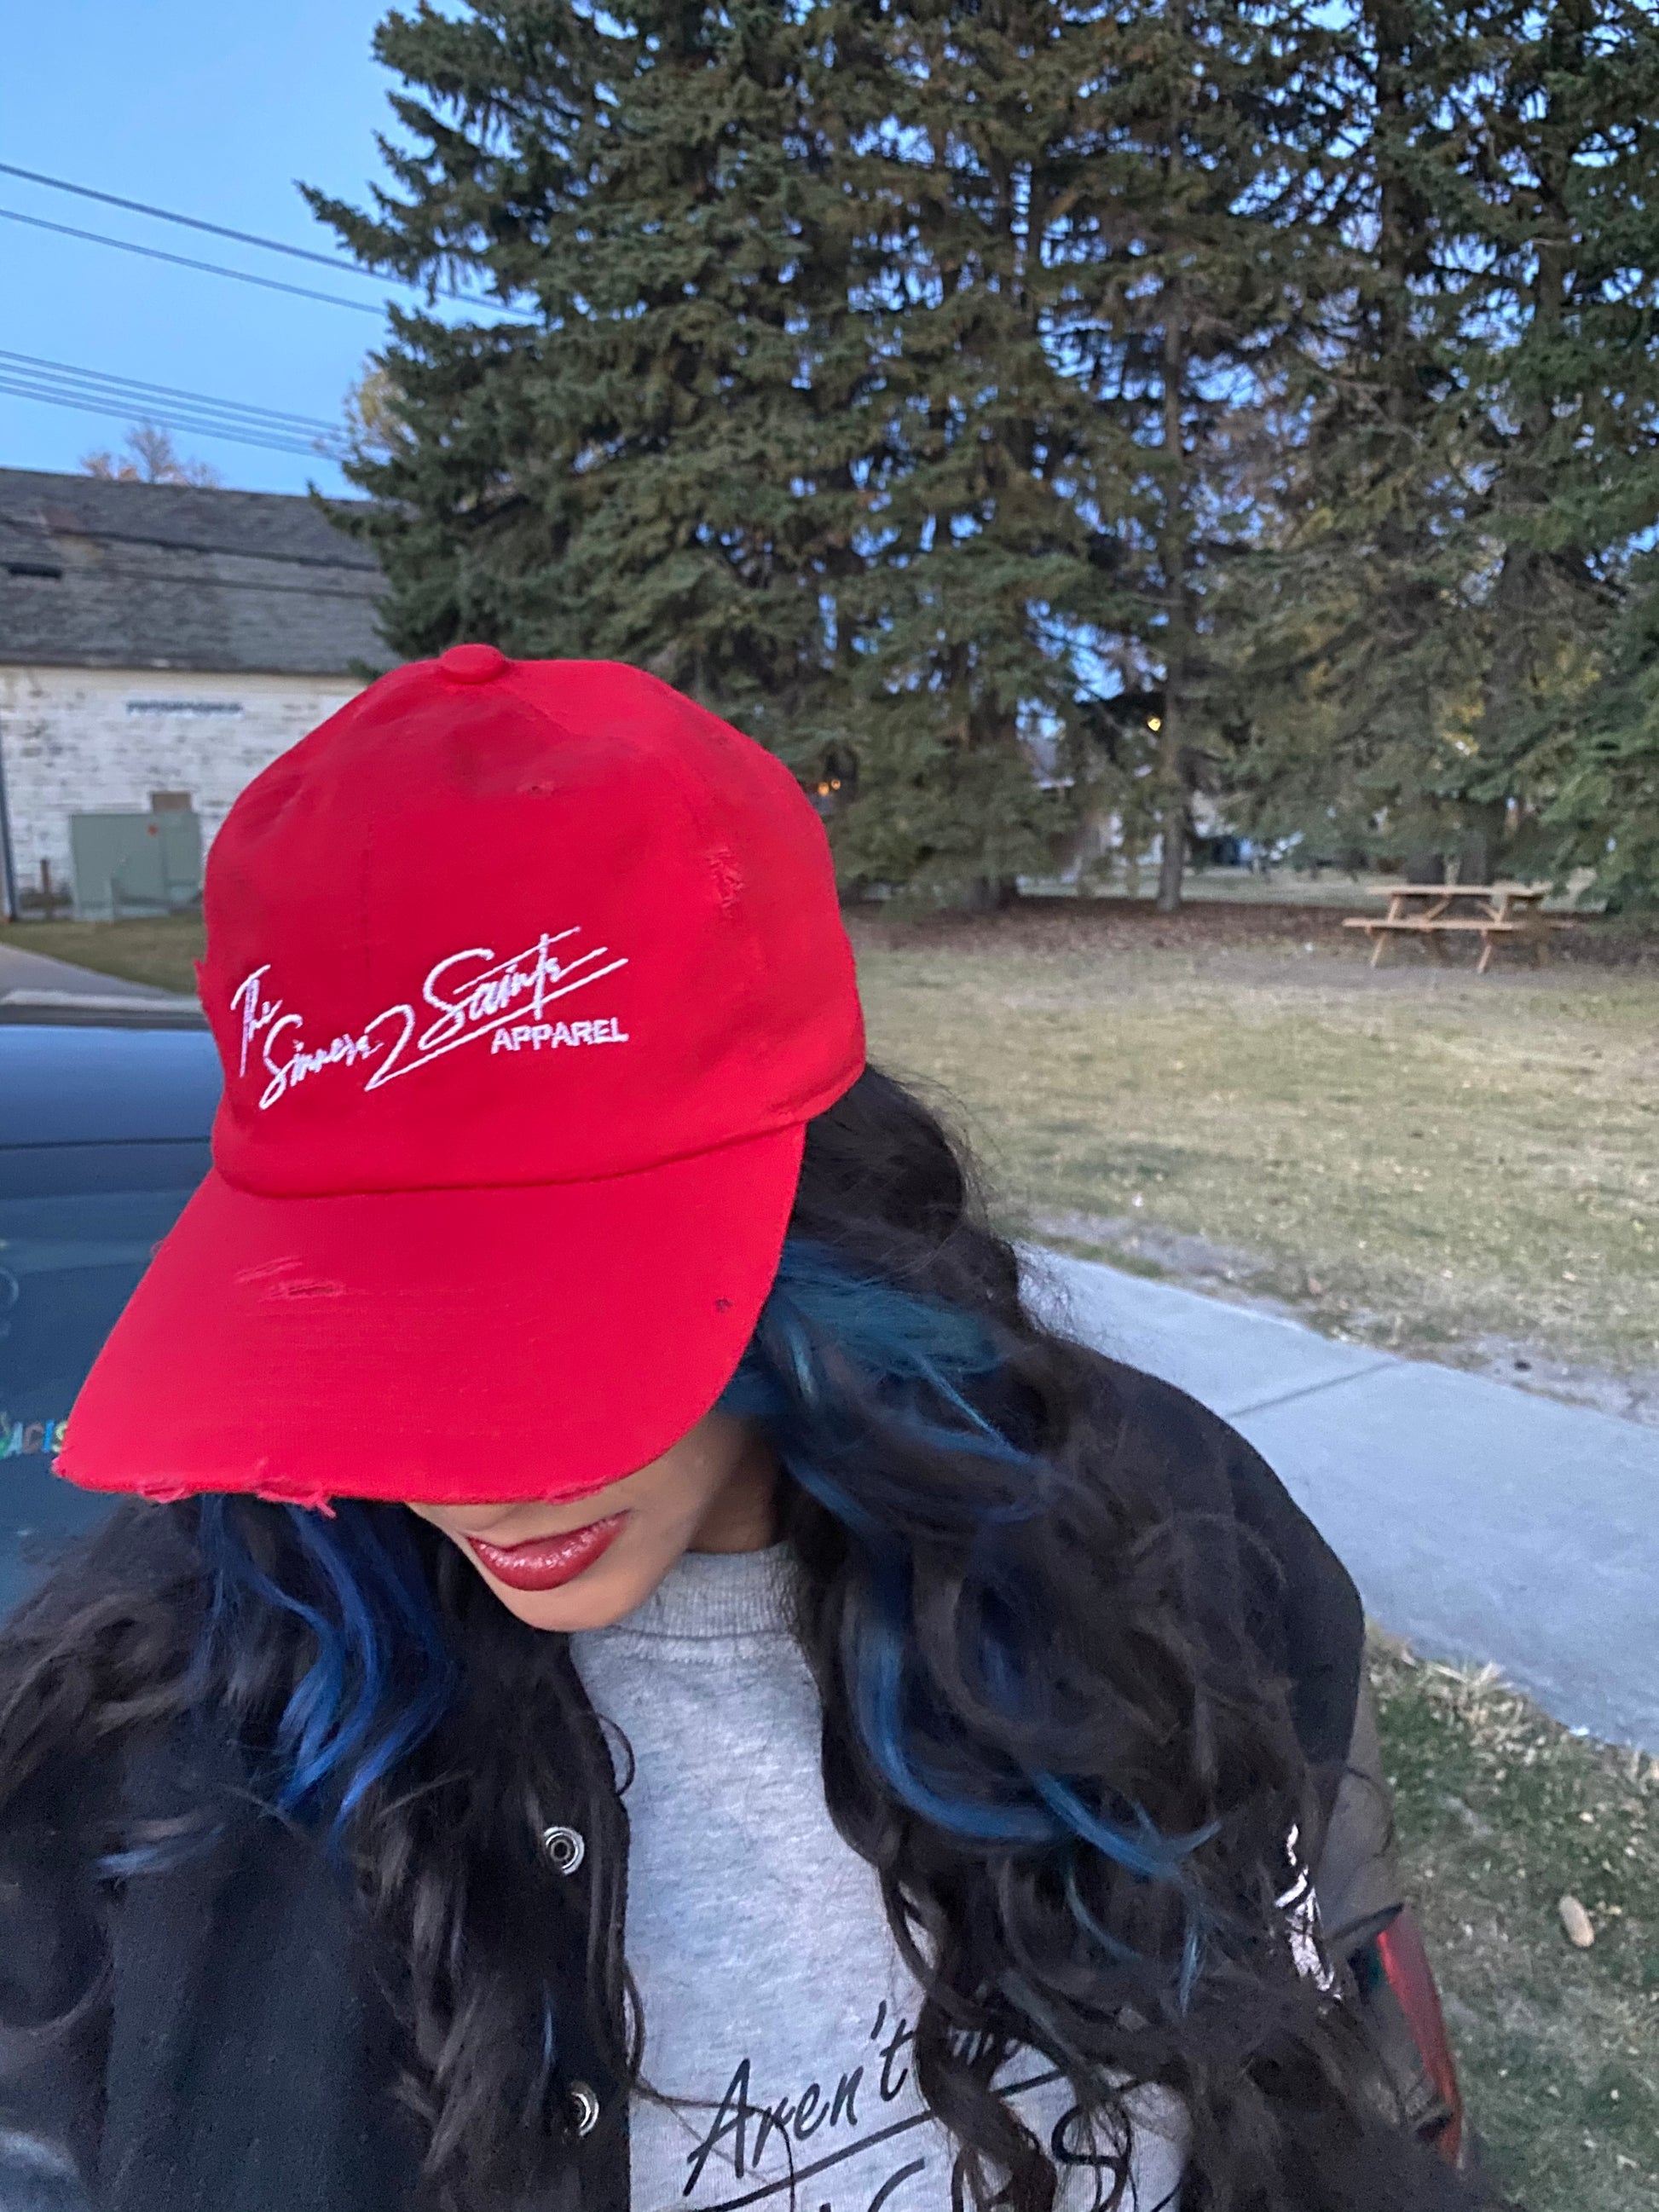 Signature Baseball Hats/Caps (Distressed) - TheSinners2Saints